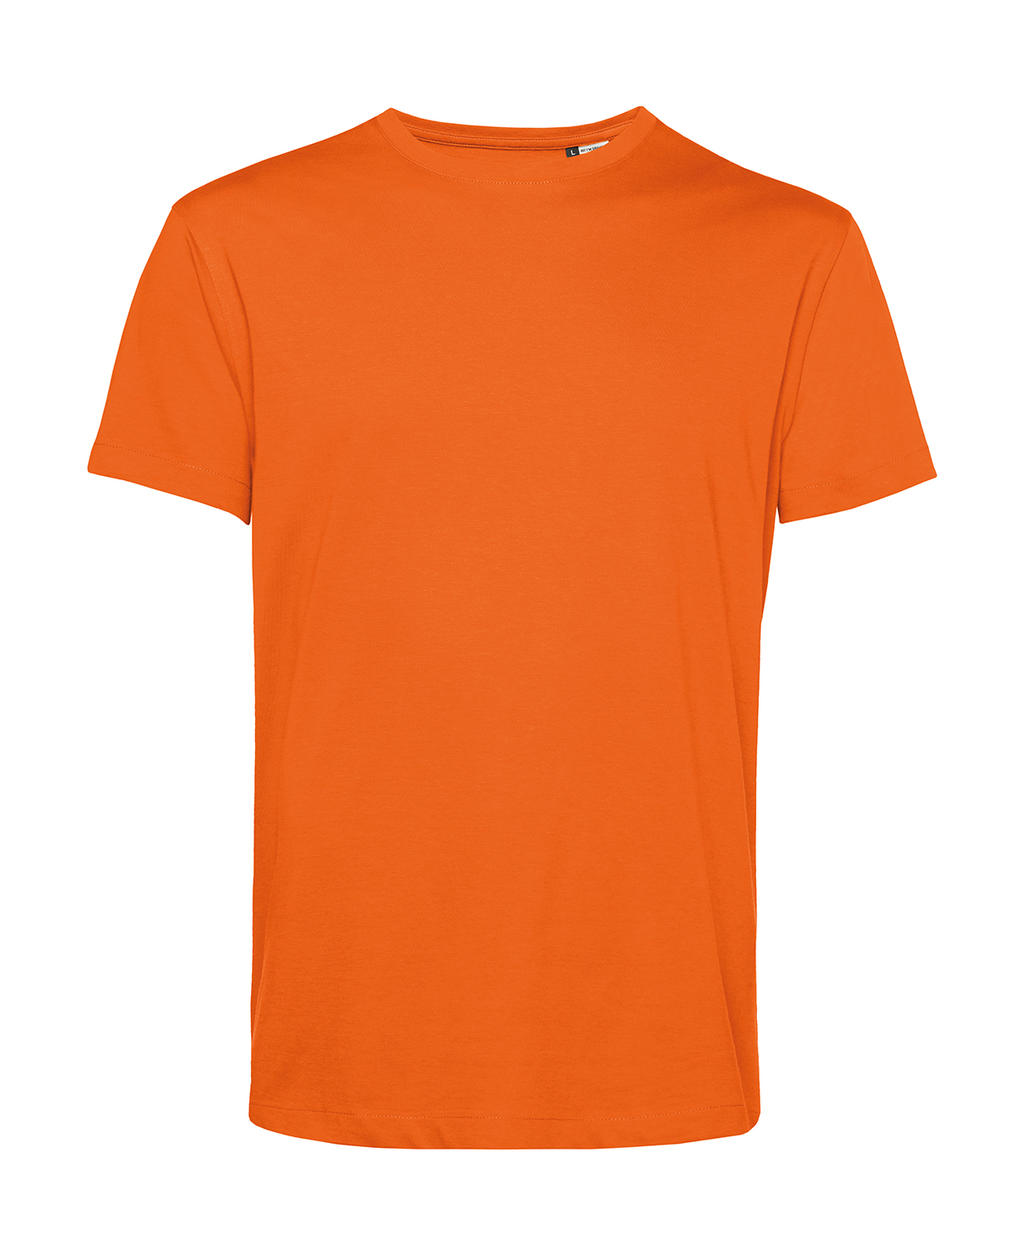 Tričko BC Organic Inspire E150 - oranžové, XS